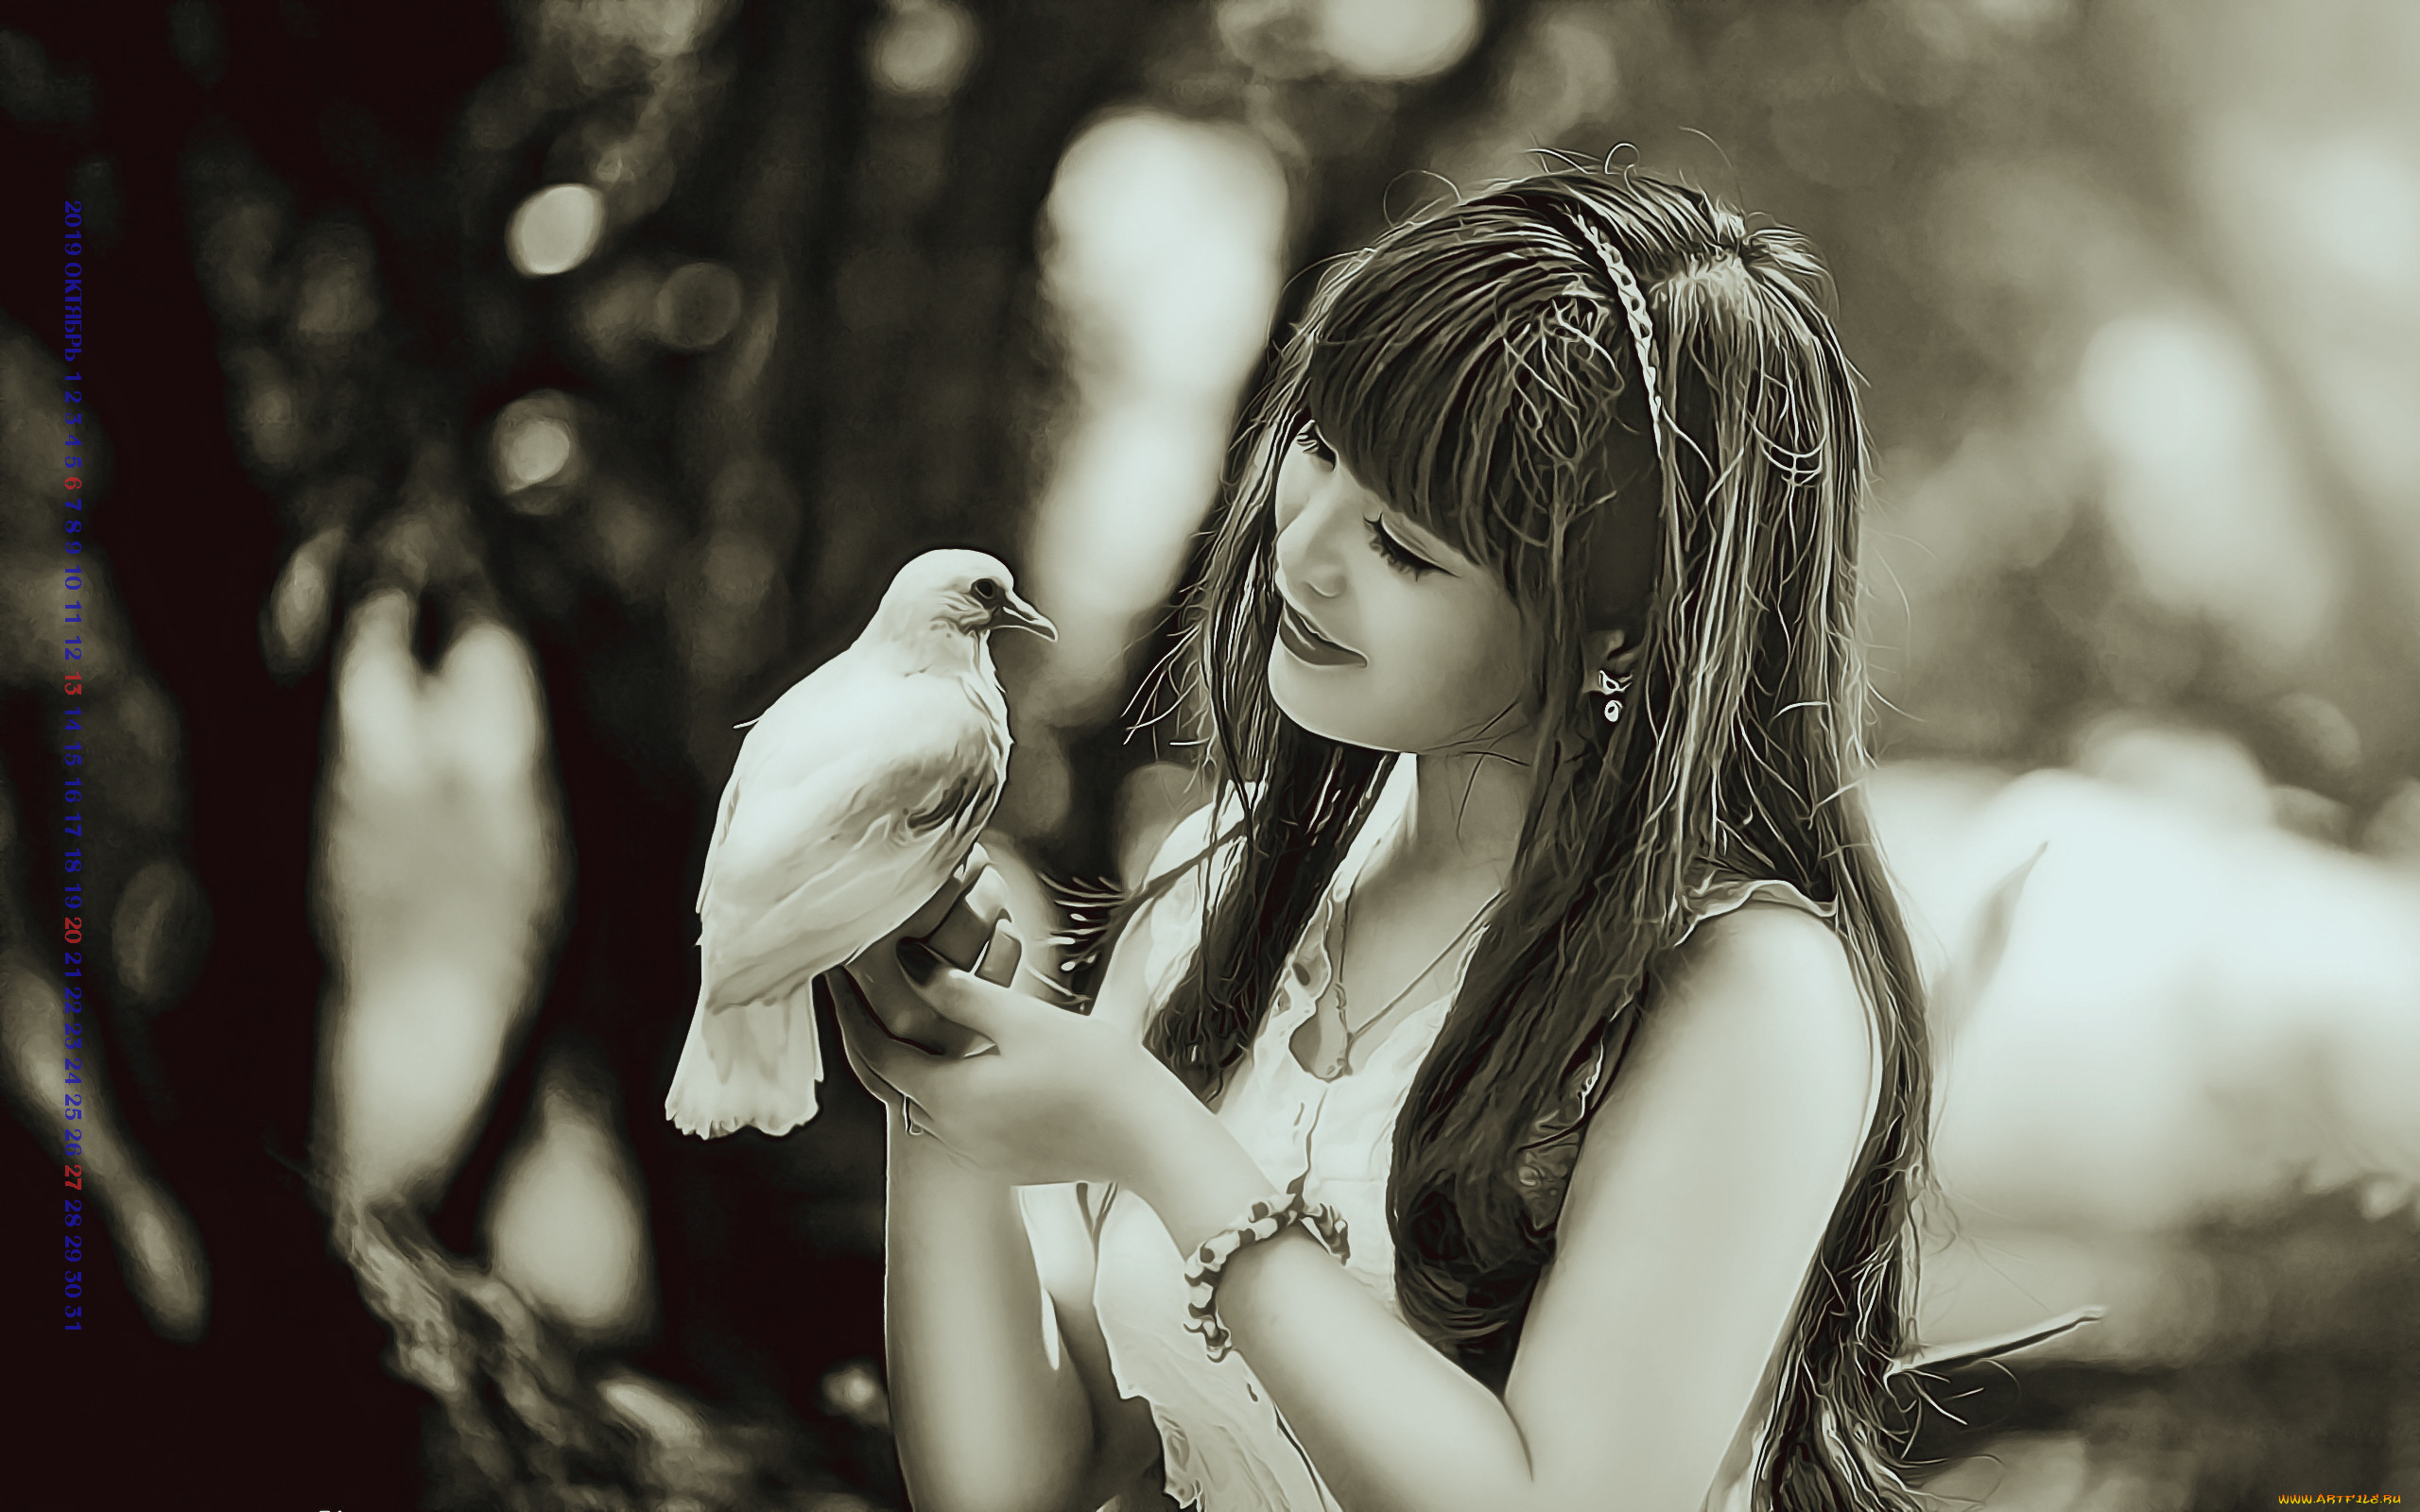 She likes birds. Девушка с птичкой. Девушка с голубем. Девушка держит птицу в руках. Девушка с птичкой в руках.